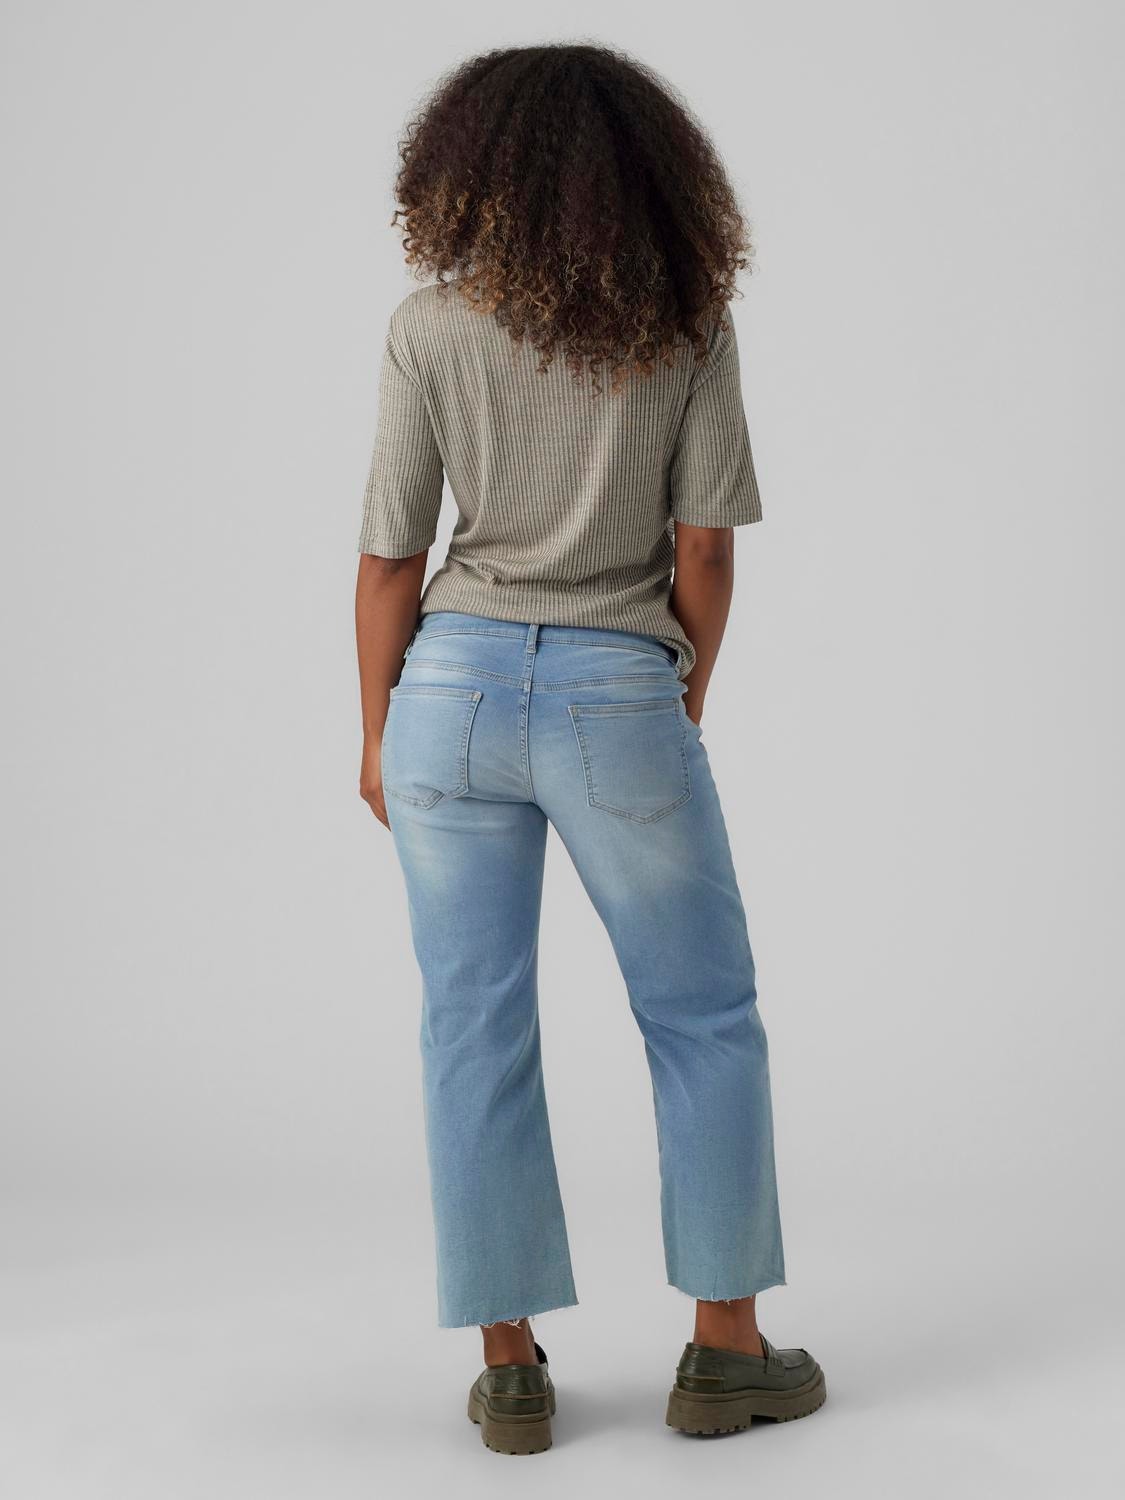 MAMA.LICIOUS Krój wide leg Średnia talia Jeans -Light Blue Denim - 20018296